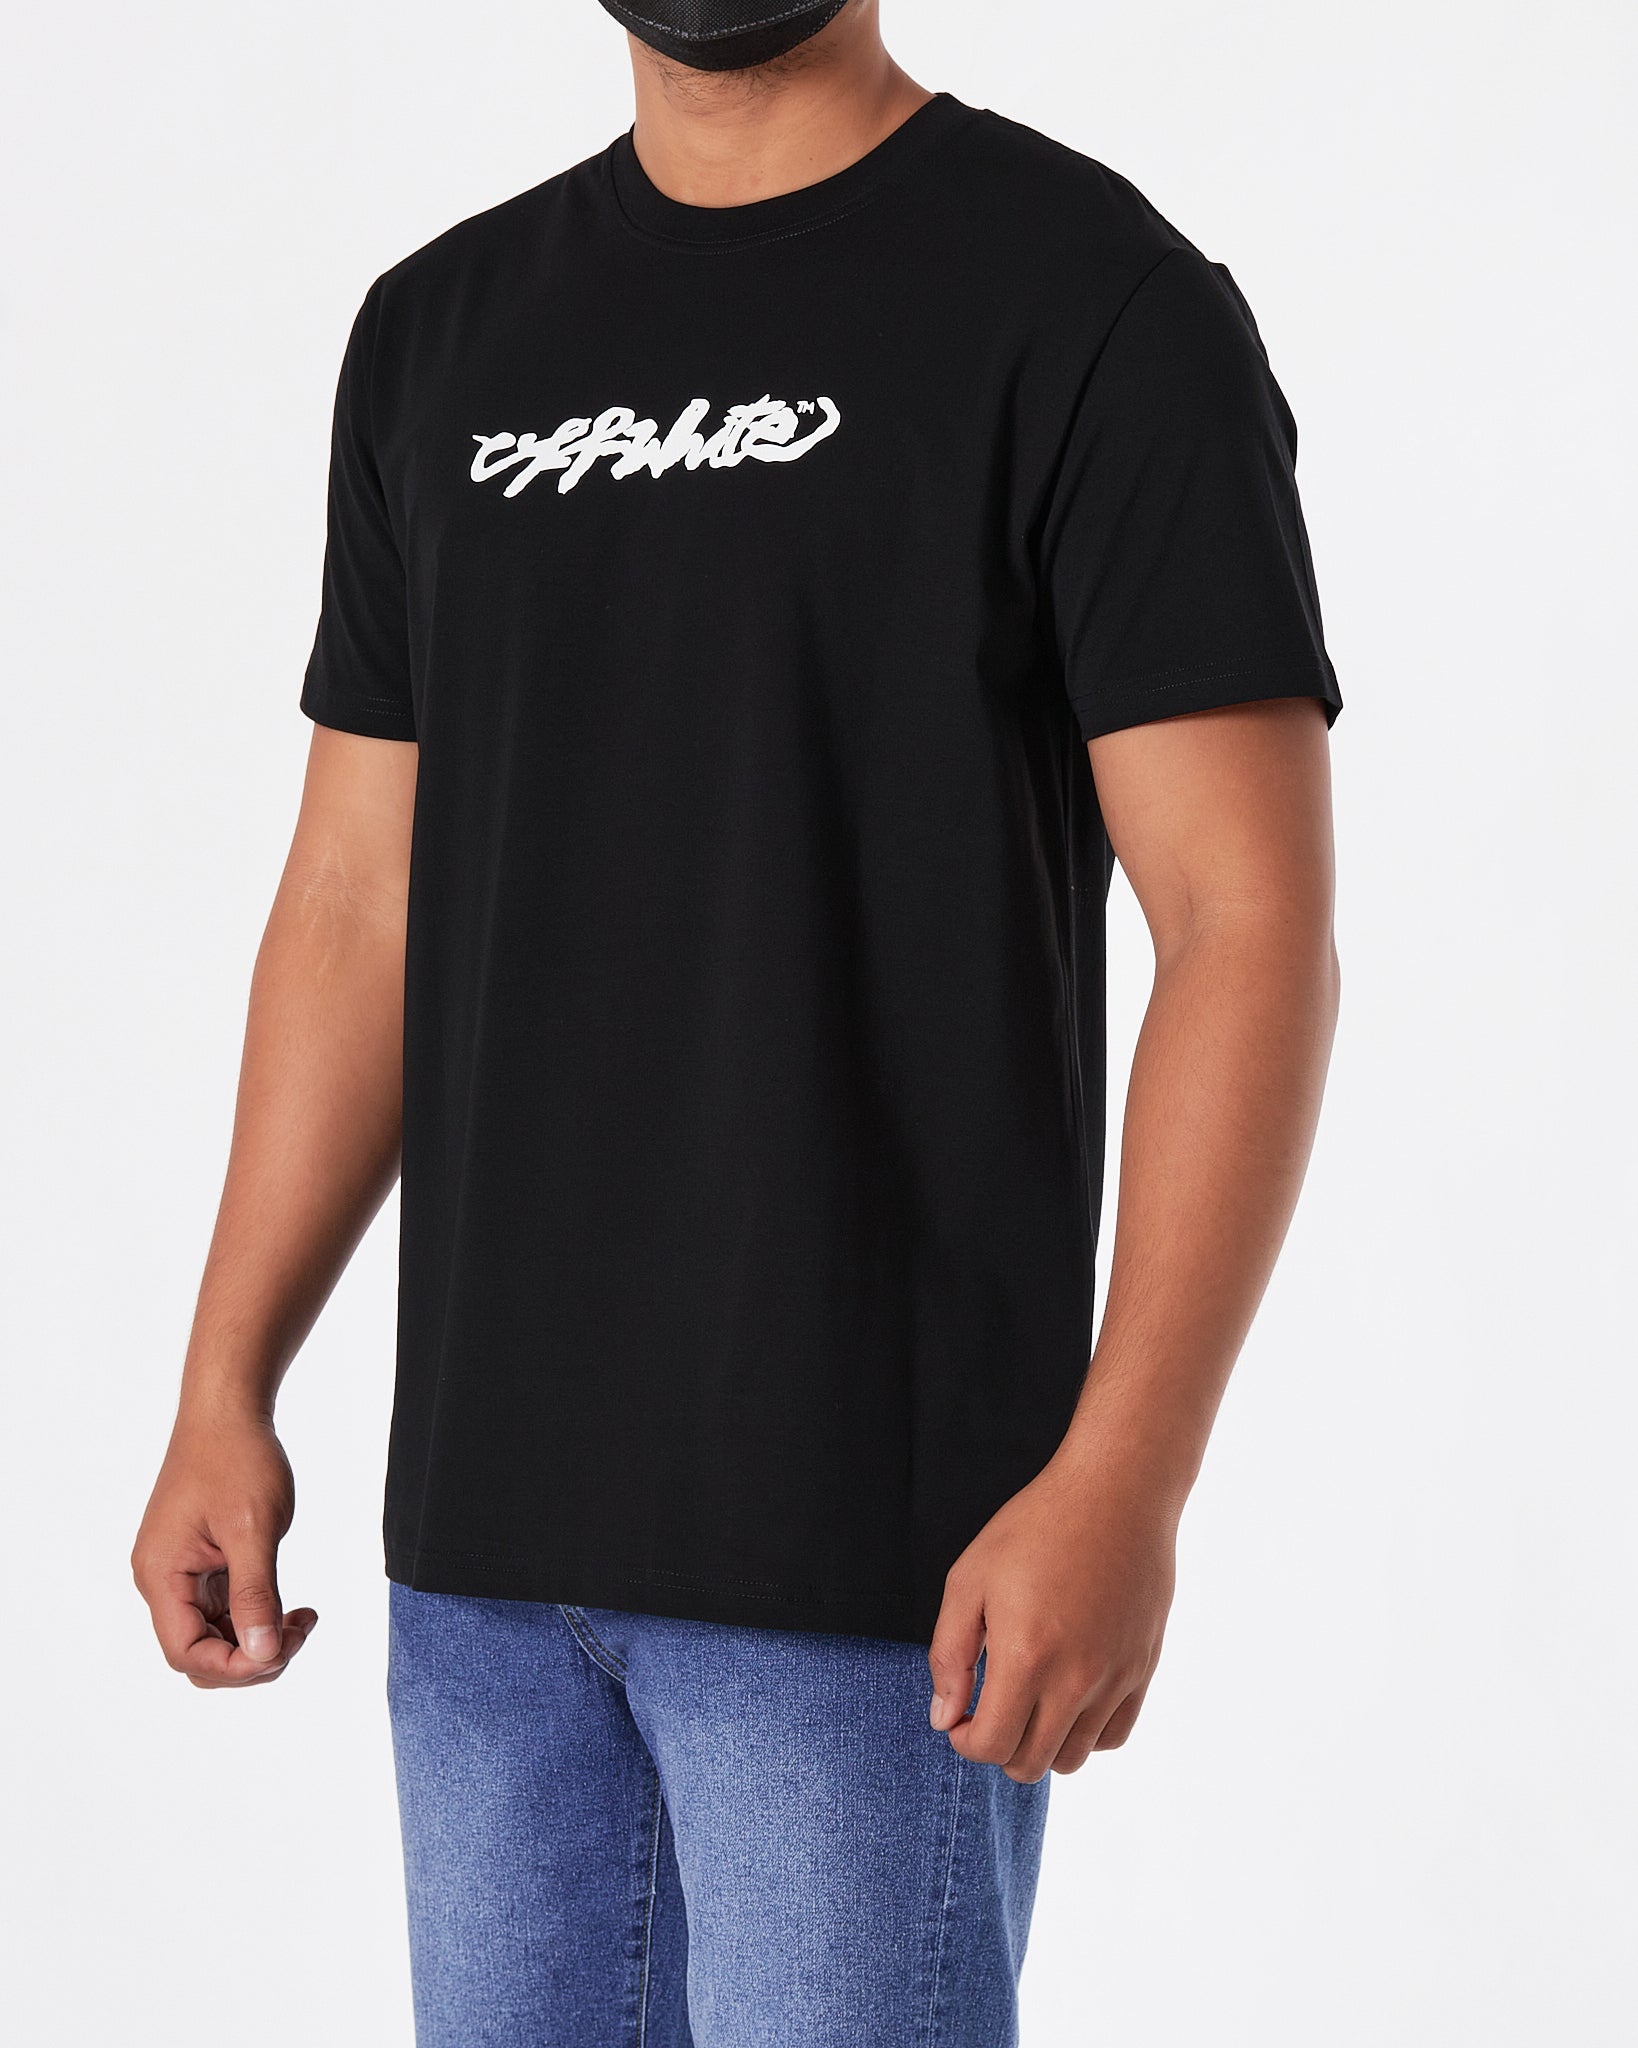 OW Arrow Back Printed Men Black T-Shirt 17.90